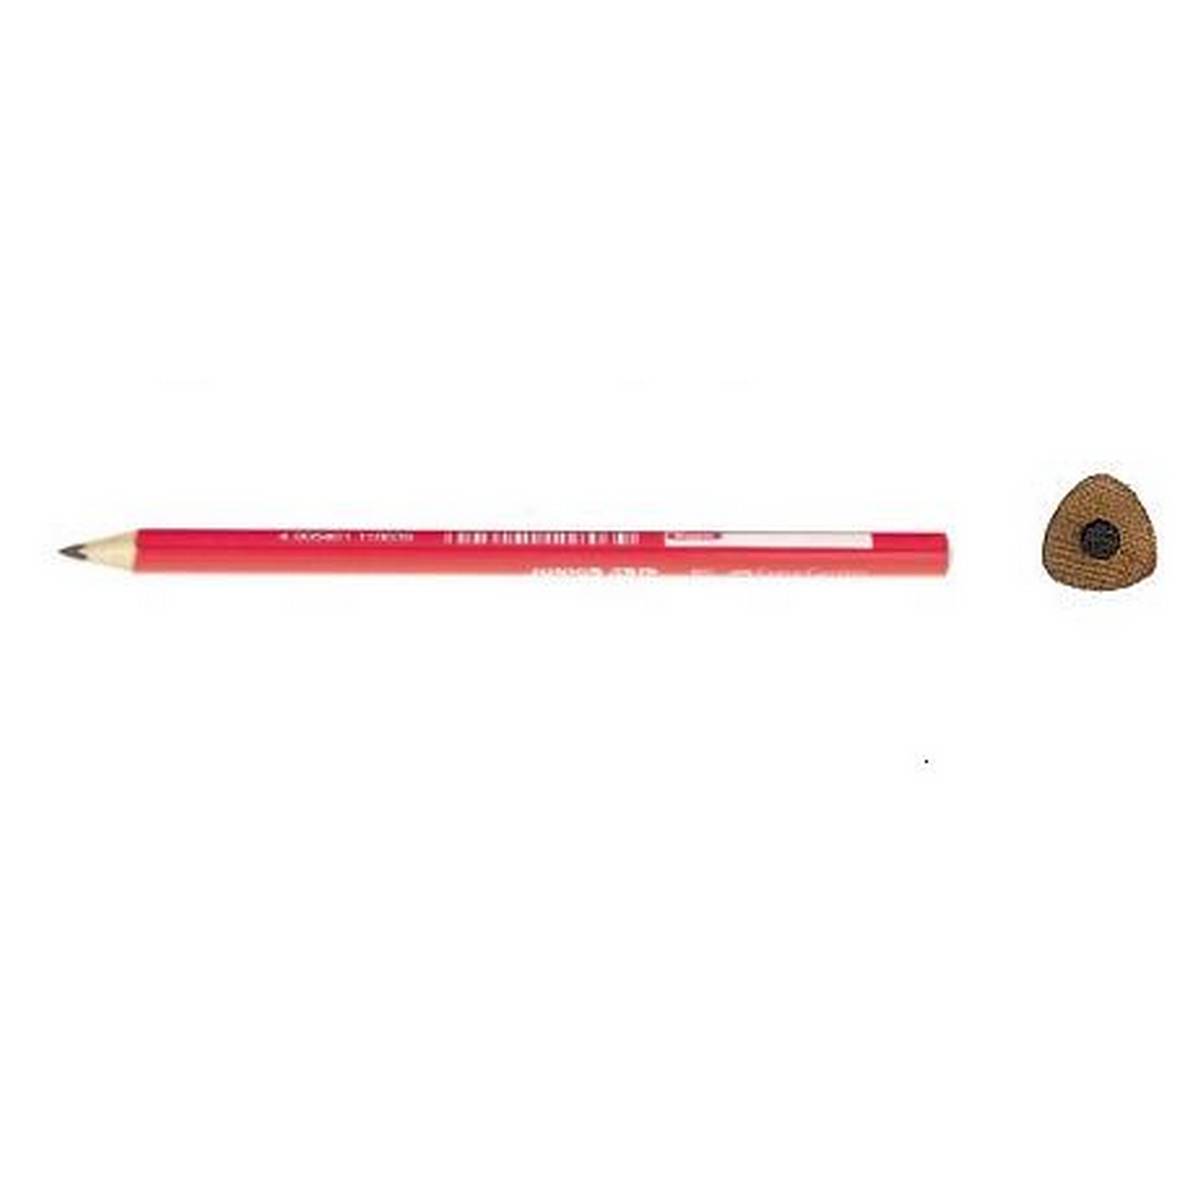 Faber Castell Junior Grip (Hand Hugger) Pencils Box of 72